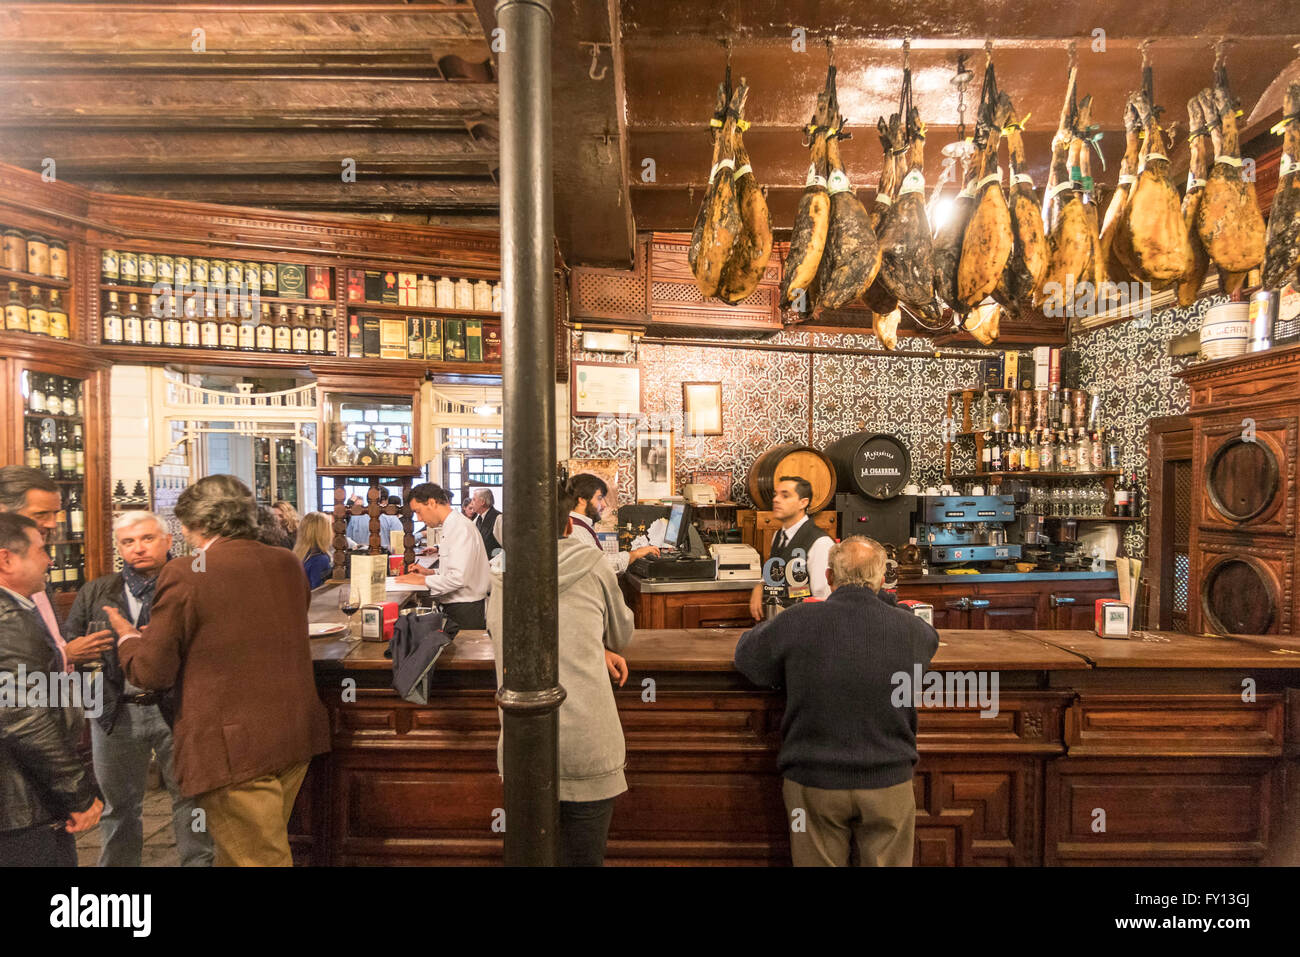 El Rinconcillo älteste Tapas-Bar in Sevilla, spanisches Restaurant, gegründet 1670, Andalusien, Spanien, Stockfoto